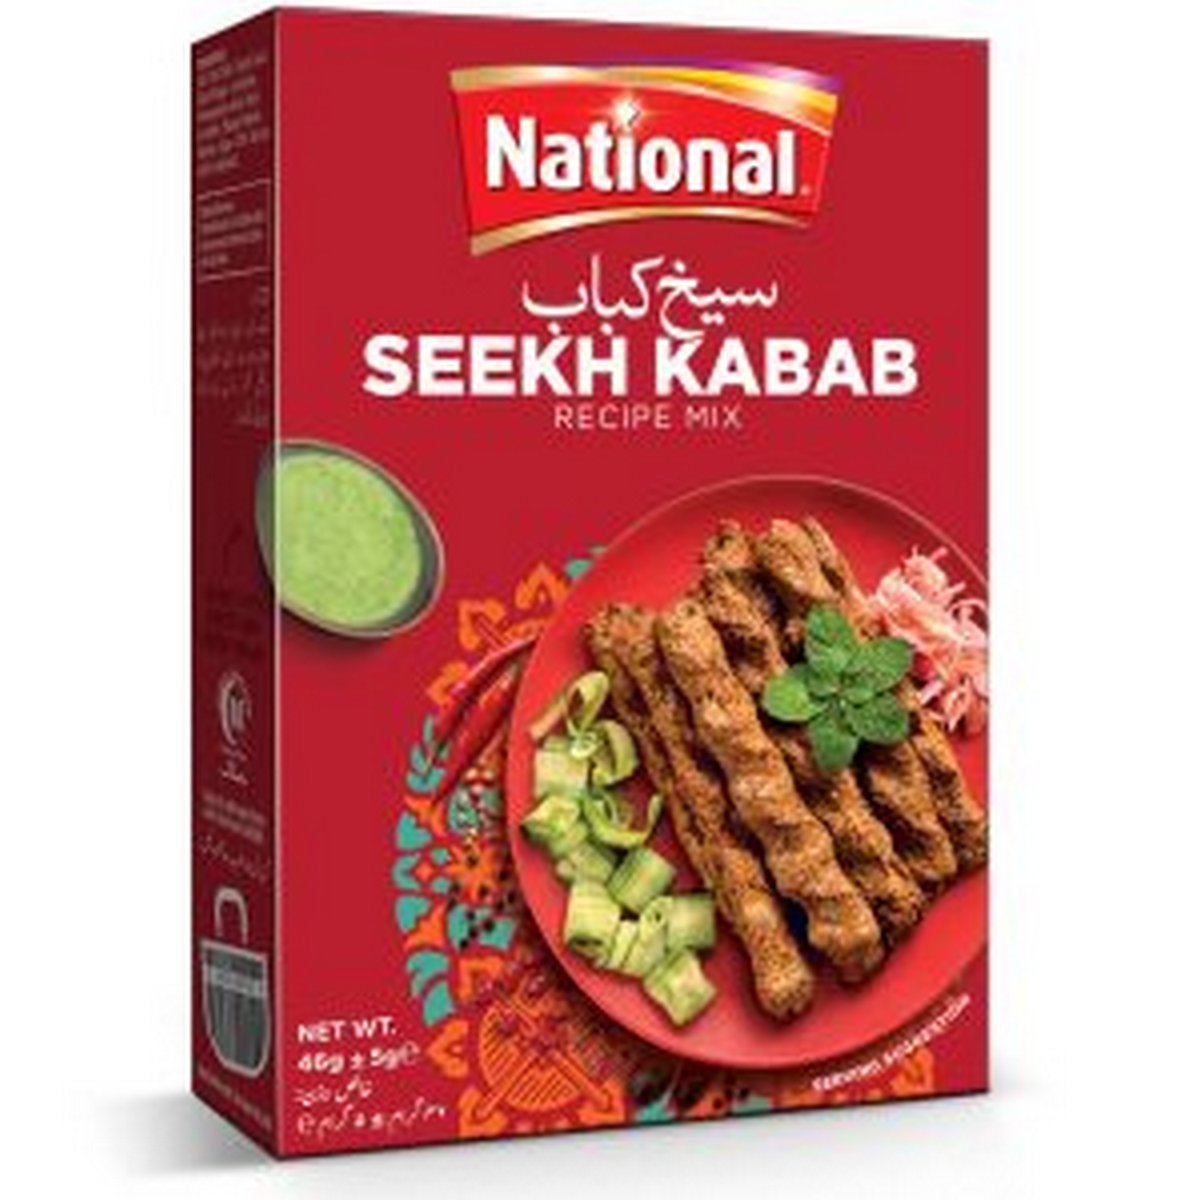 National Seekh Kabab 46g